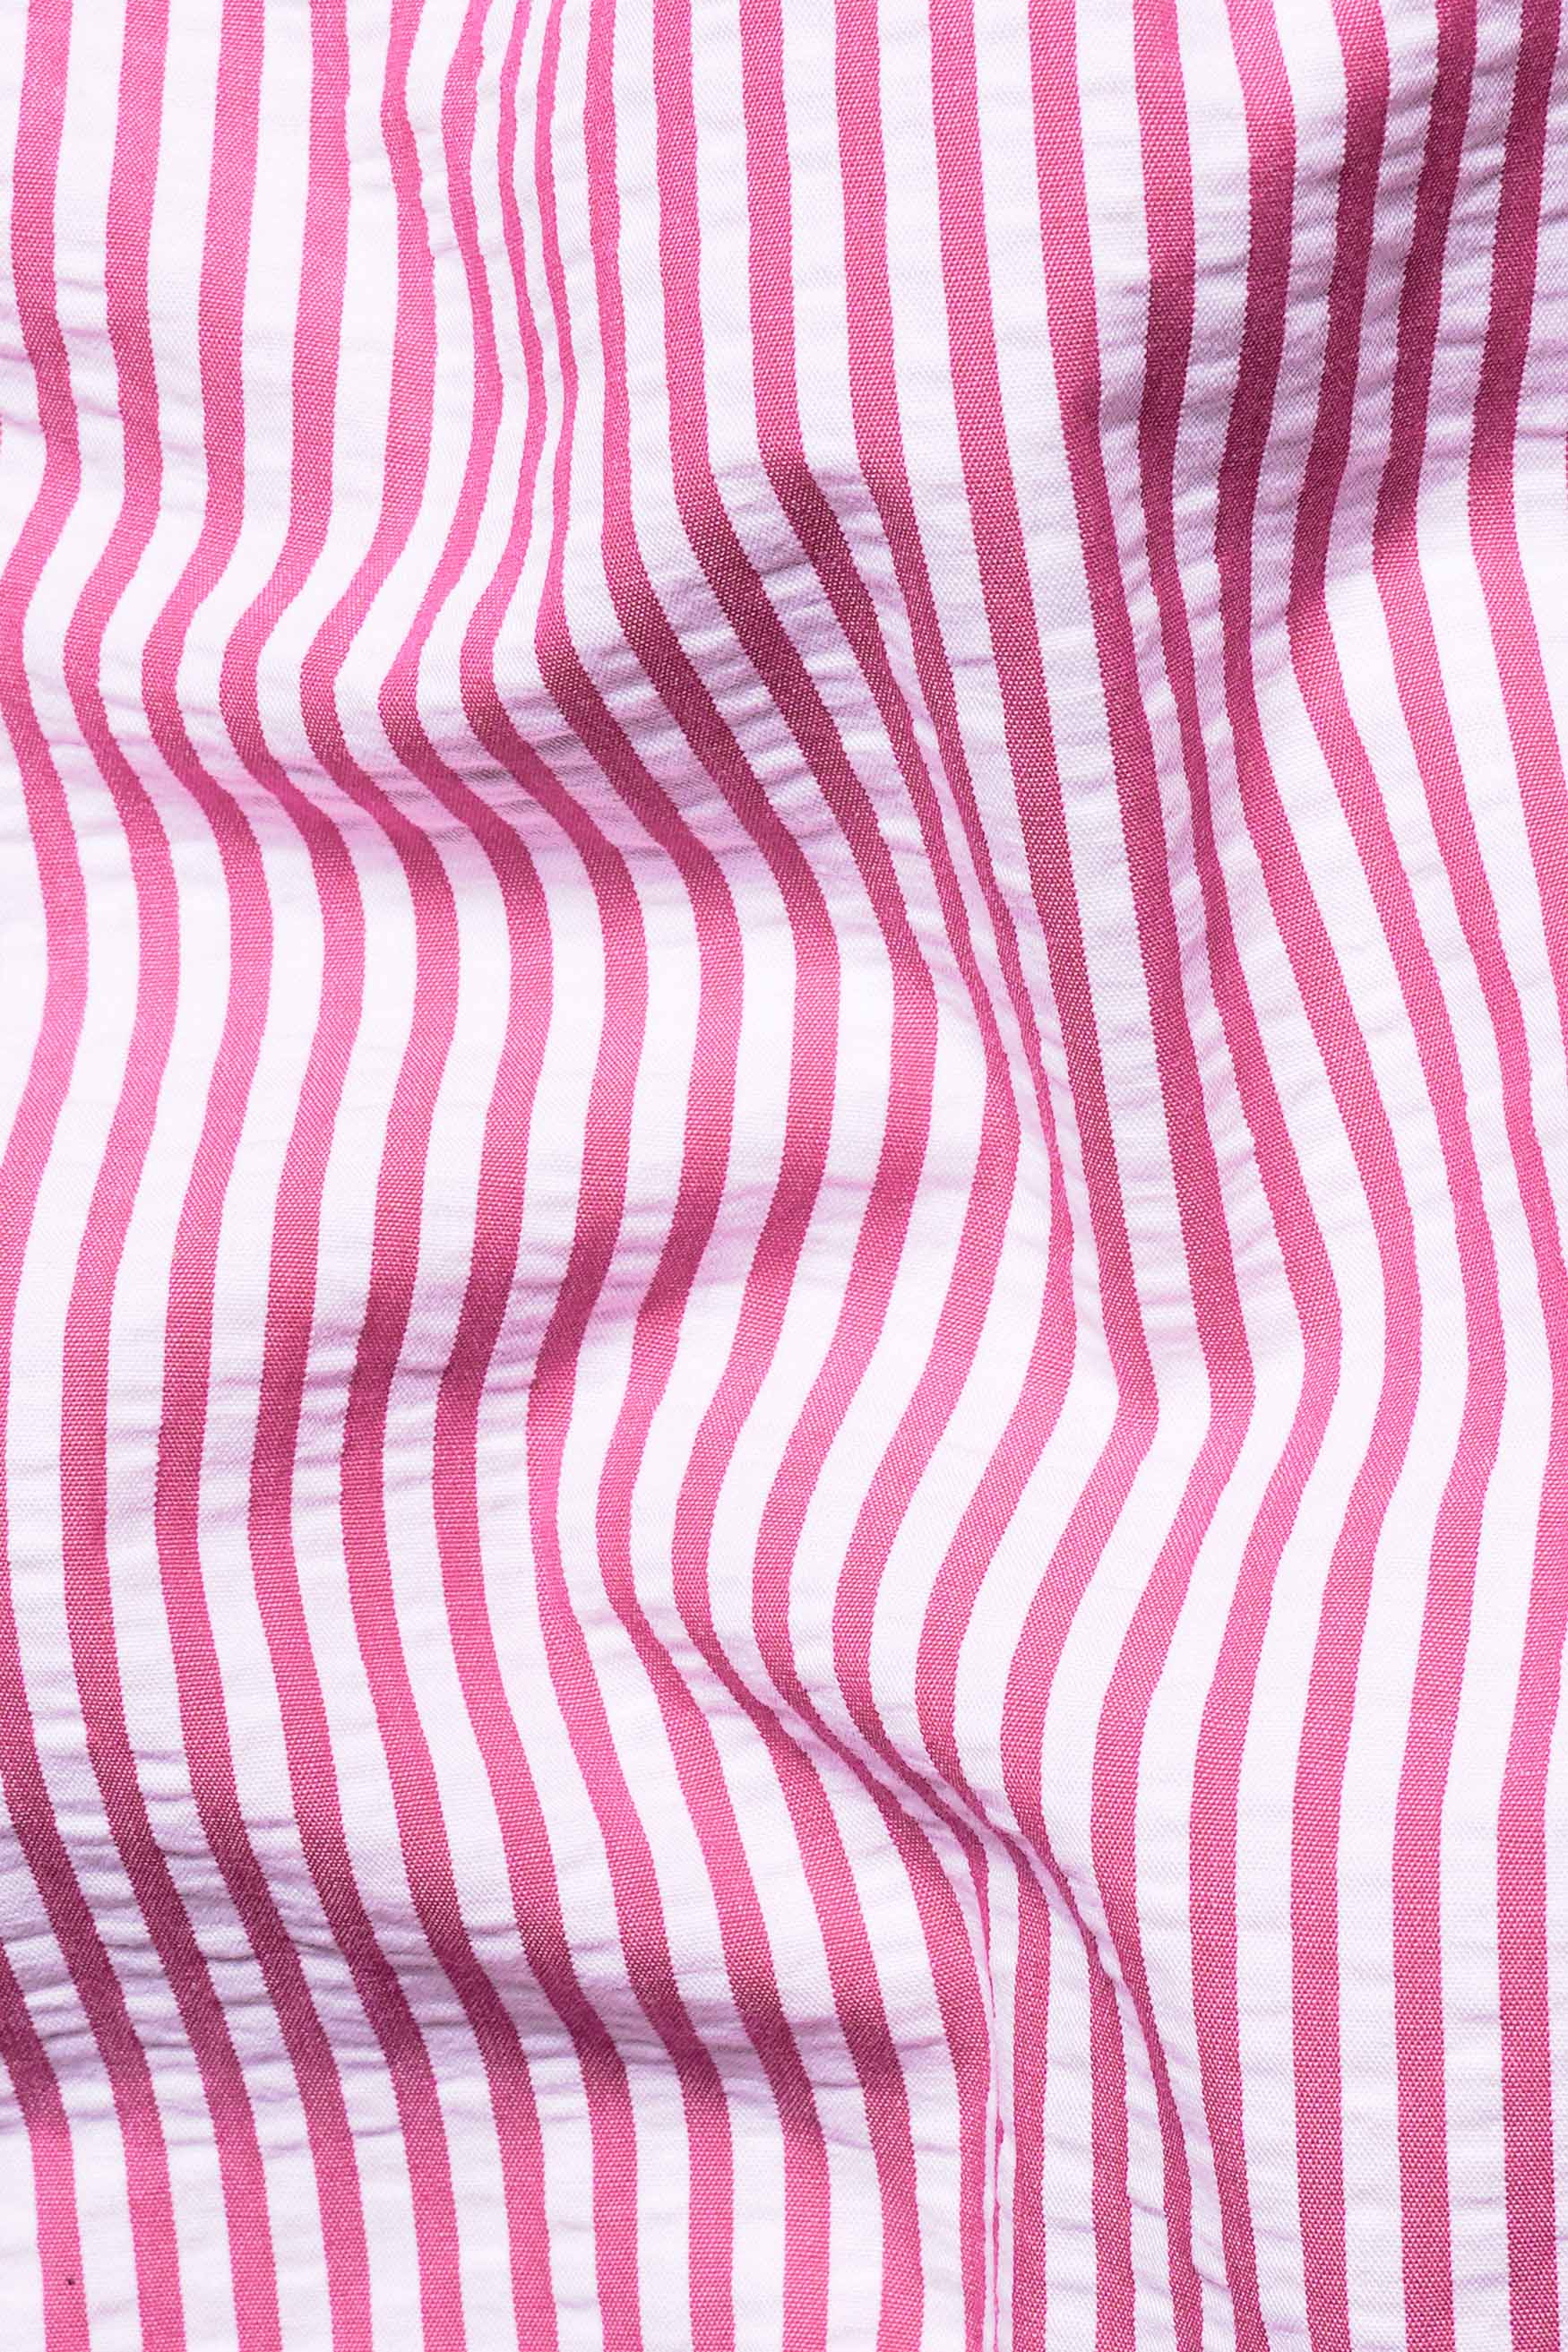 Taffy Pink and Bright White Striped Seersucker Giza Cotton Shirt 11409-CA-38, 11409-CA-H-38, 11409-CA-39, 11409-CA-H-39, 11409-CA-40, 11409-CA-H-40, 11409-CA-42, 11409-CA-H-42, 11409-CA-44, 11409-CA-H-44, 11409-CA-46, 11409-CA-H-46, 11409-CA-48, 11409-CA-H-48, 11409-CA-50, 11409-CA-H-50, 11409-CA-52, 11409-CA-H-52